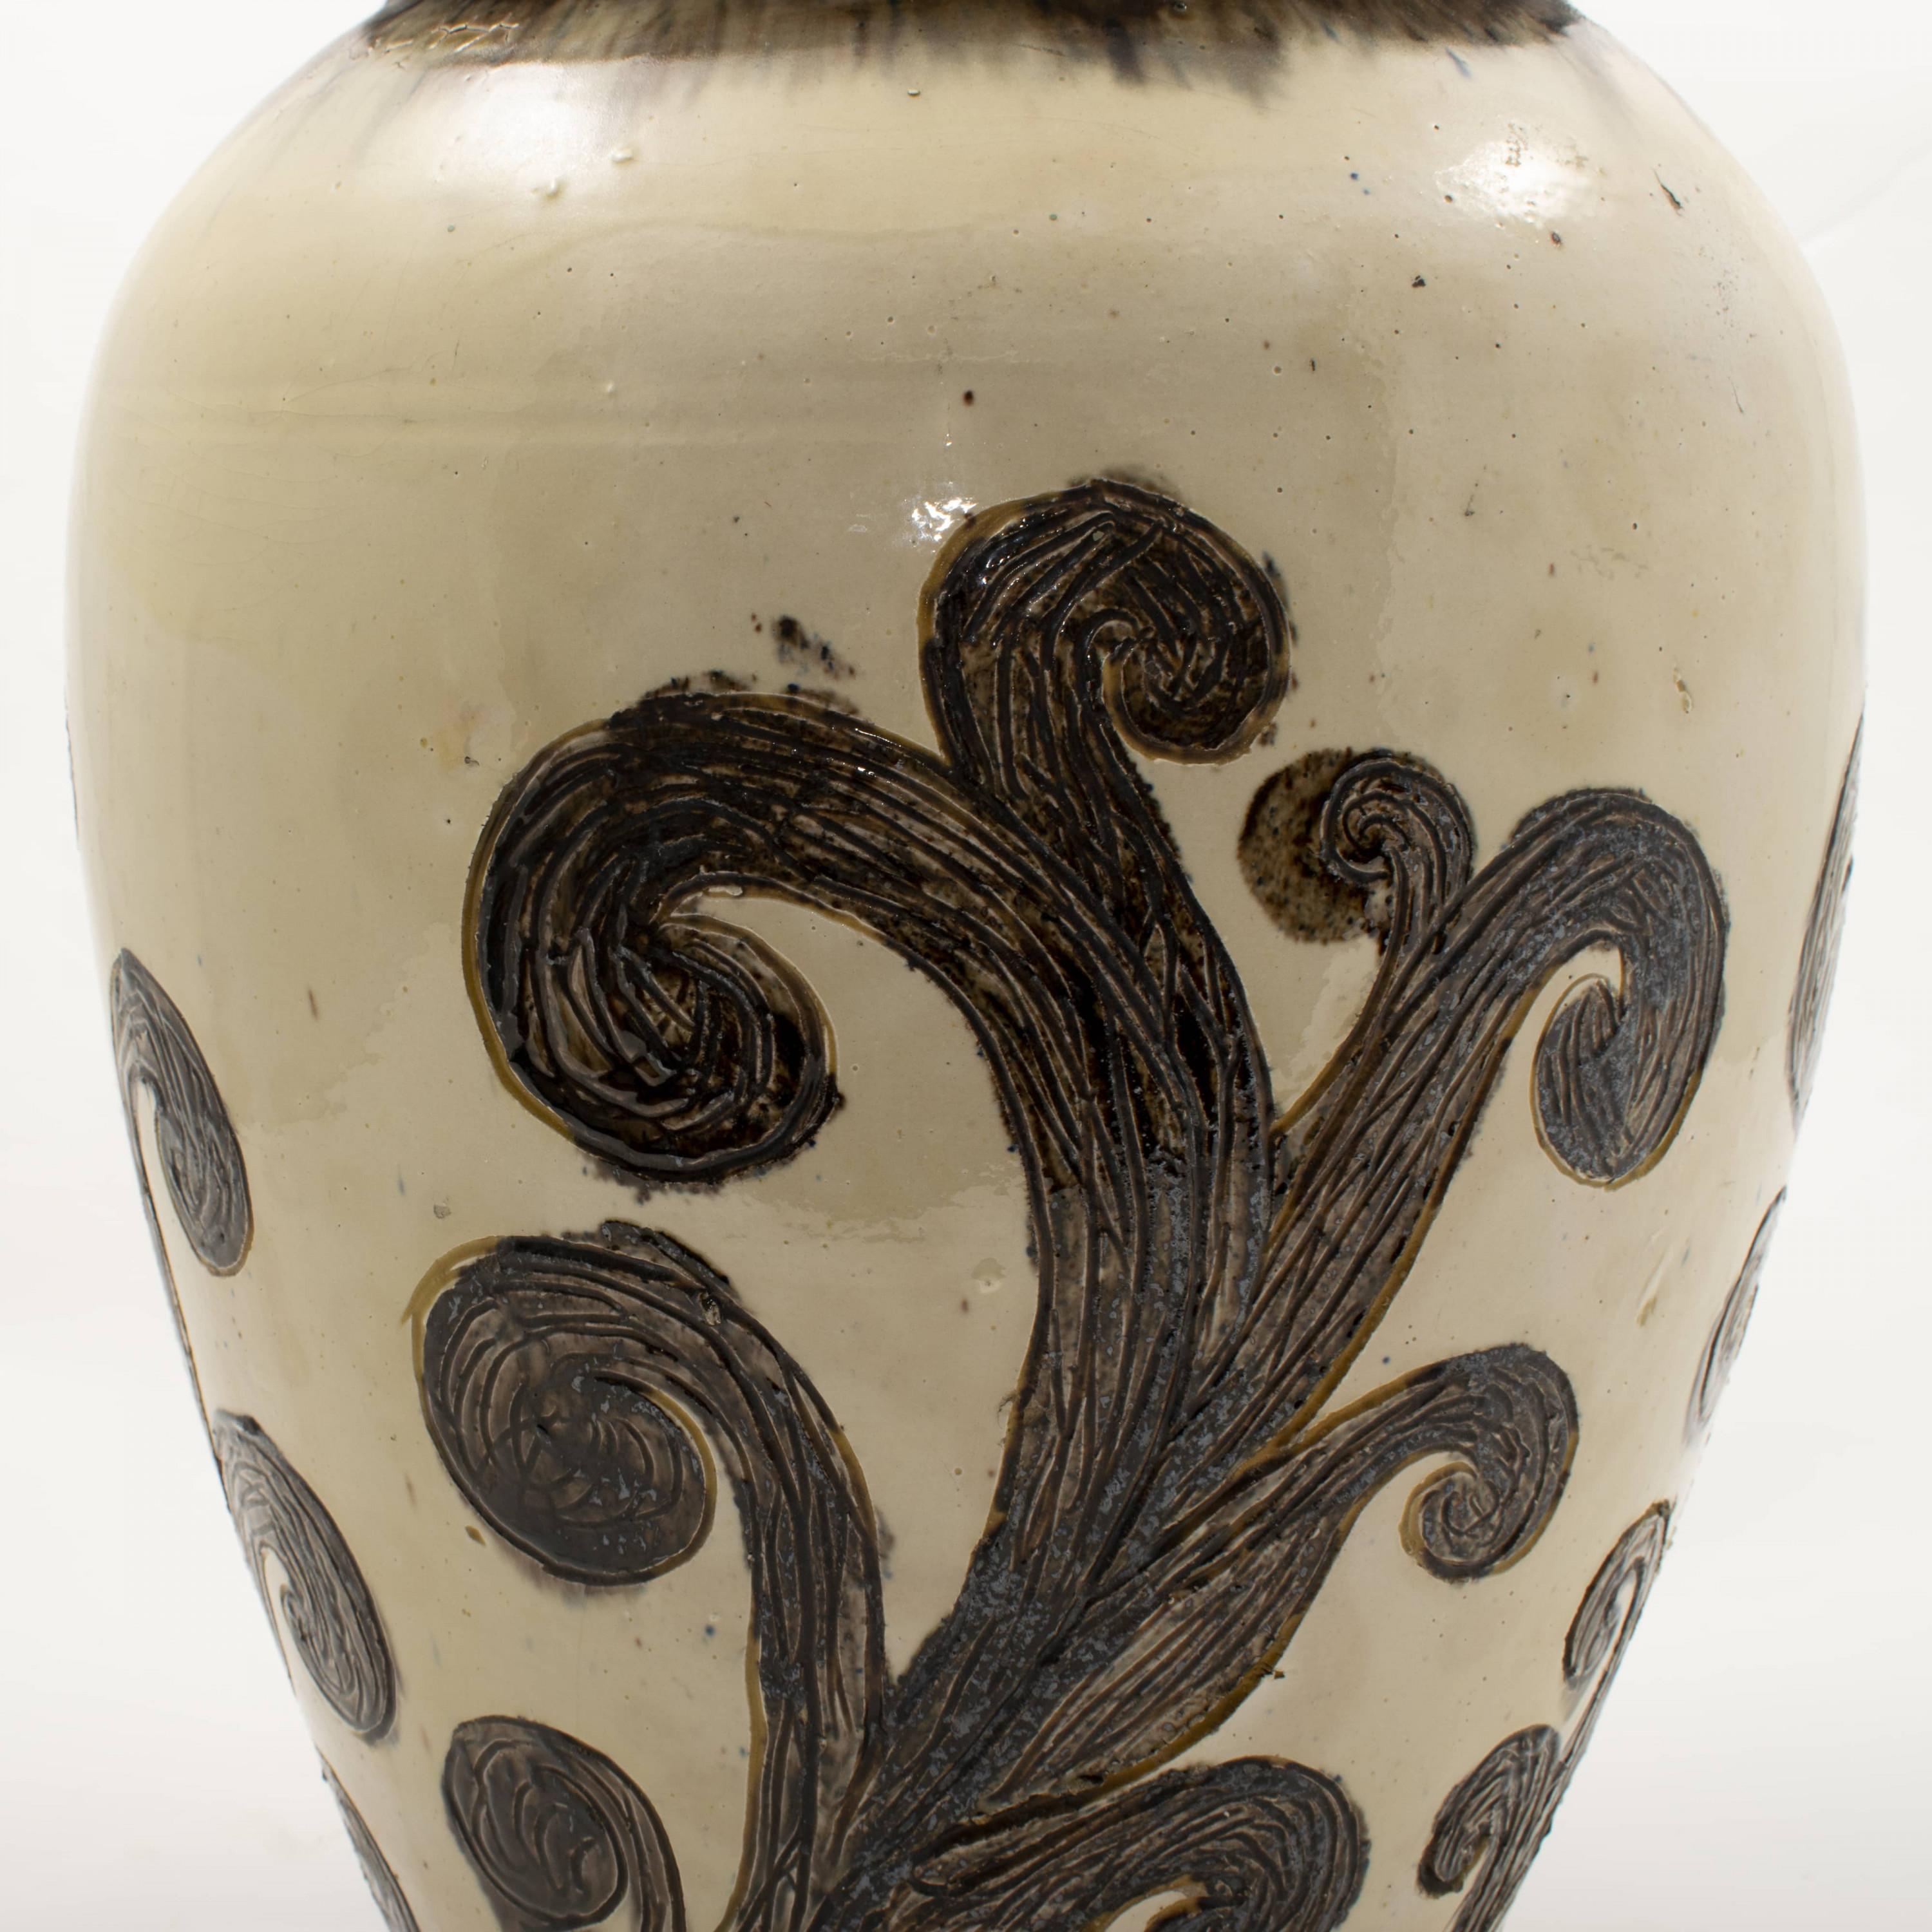 Glazed Thorvald Bindesbøll, Large One of a Kind Ceramic Vase with Organic Motifs For Sale